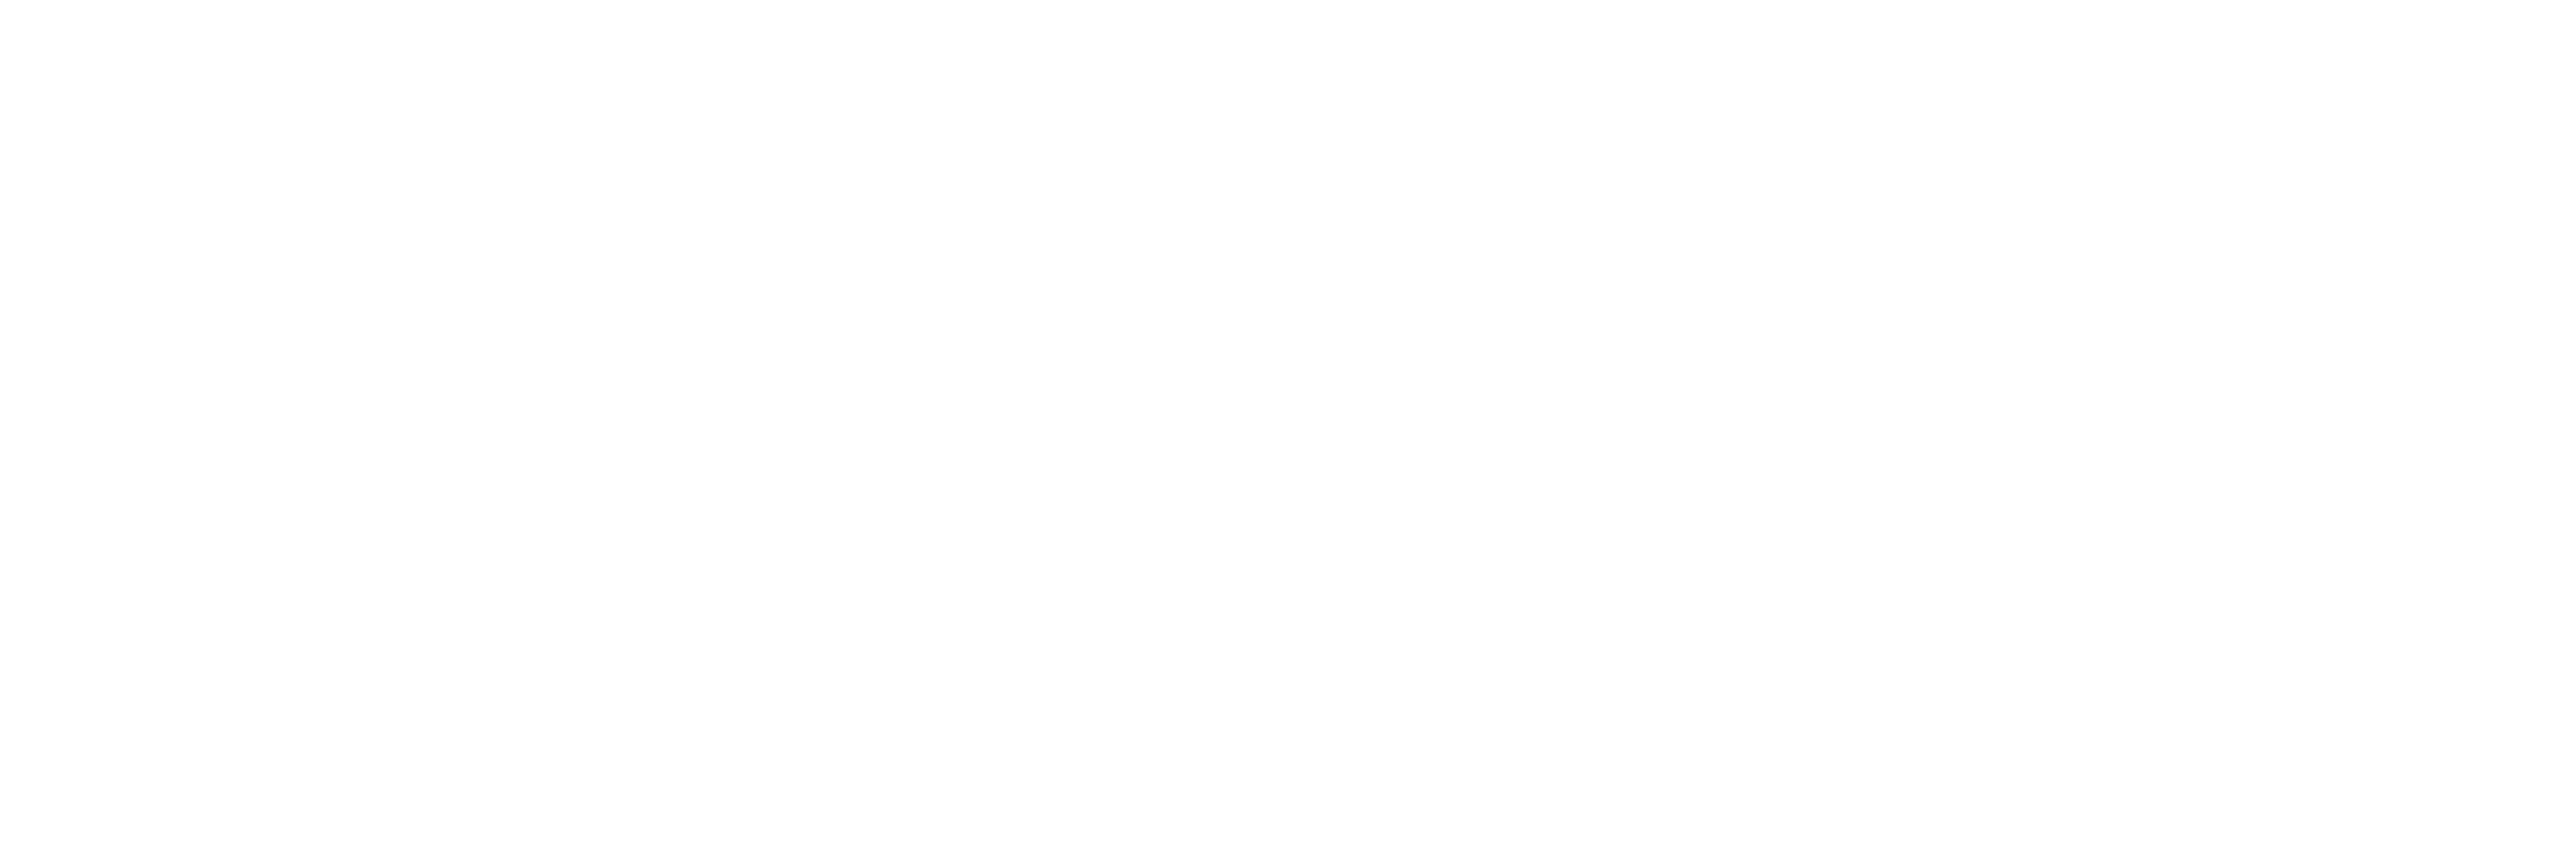 Google Corp. all white logo